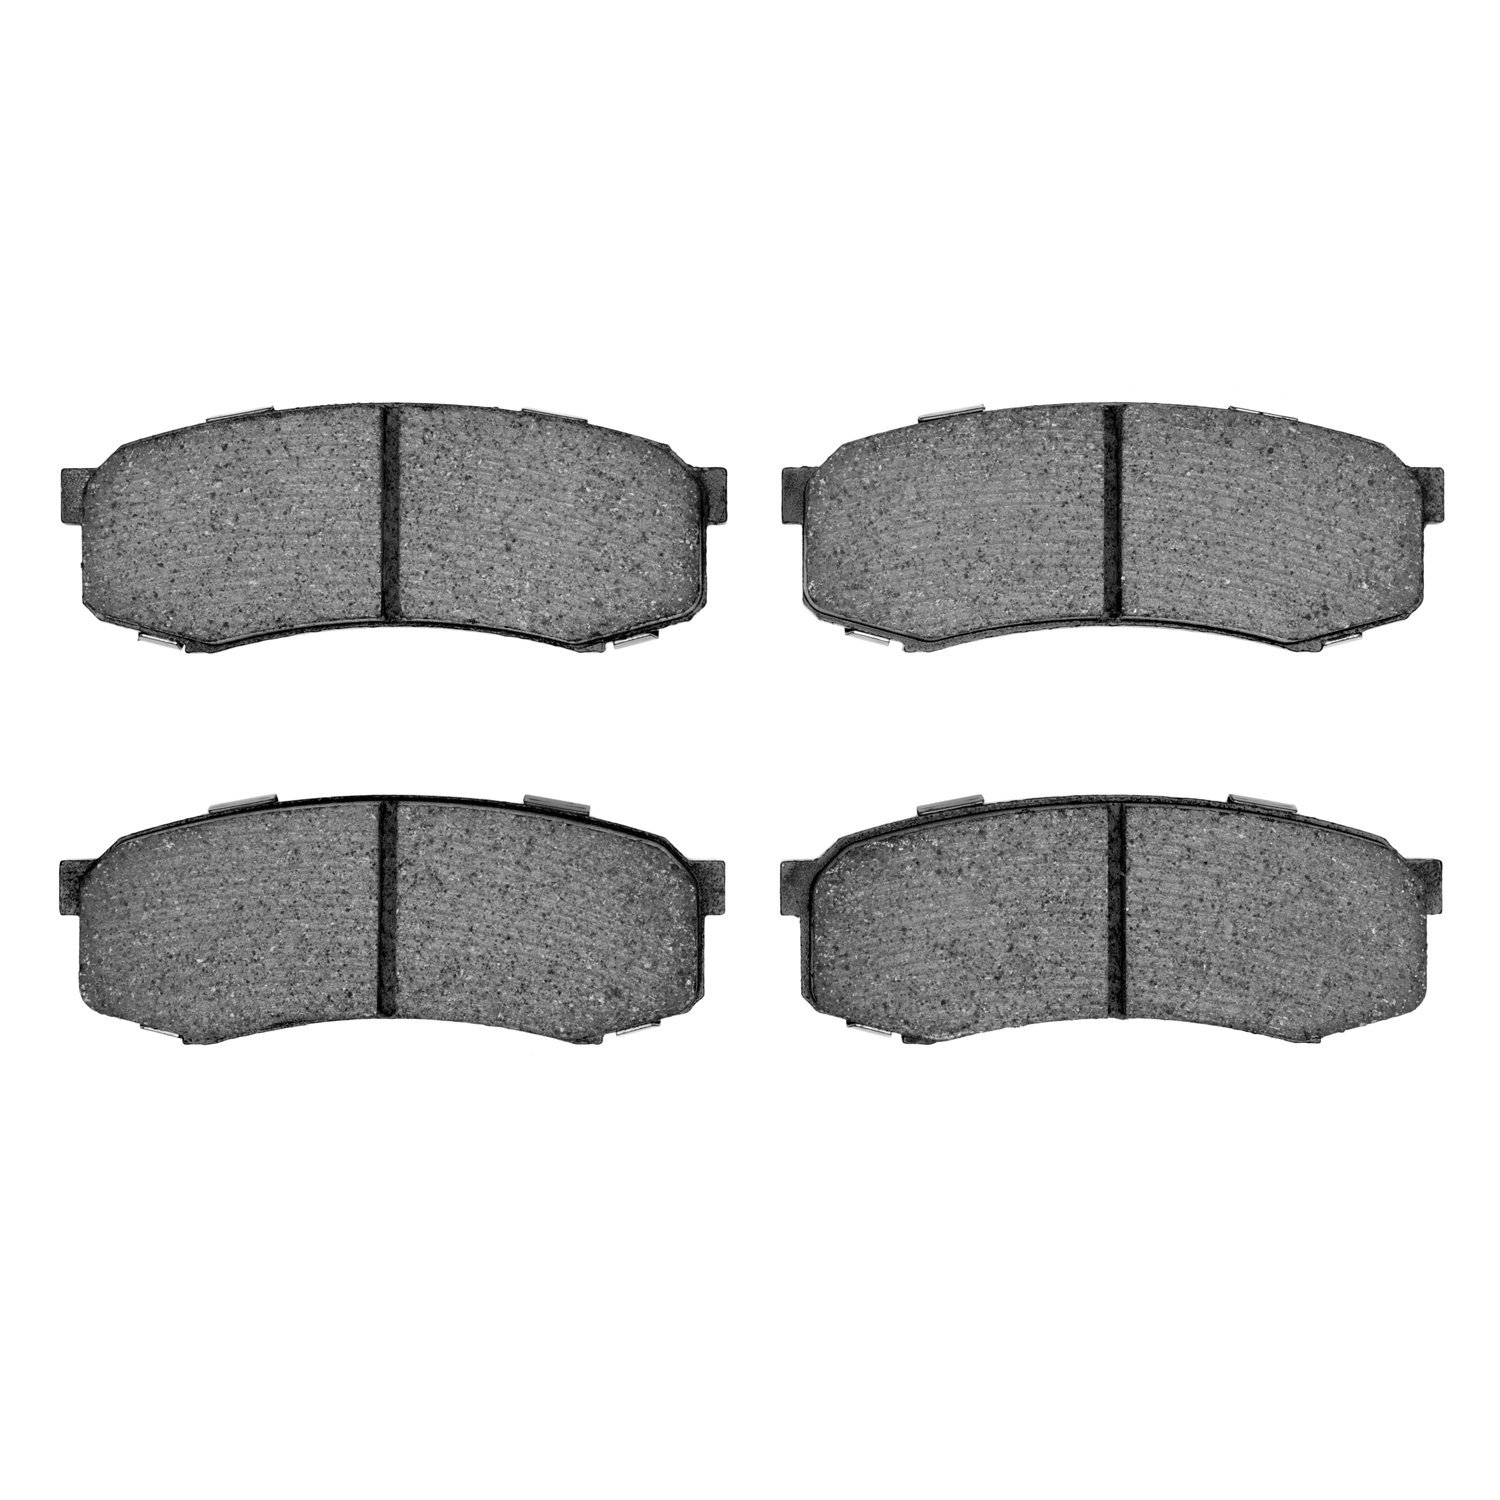 1310-0606-00 3000-Series Ceramic Brake Pads, Fits Select Multiple Makes/Models, Position: Rear